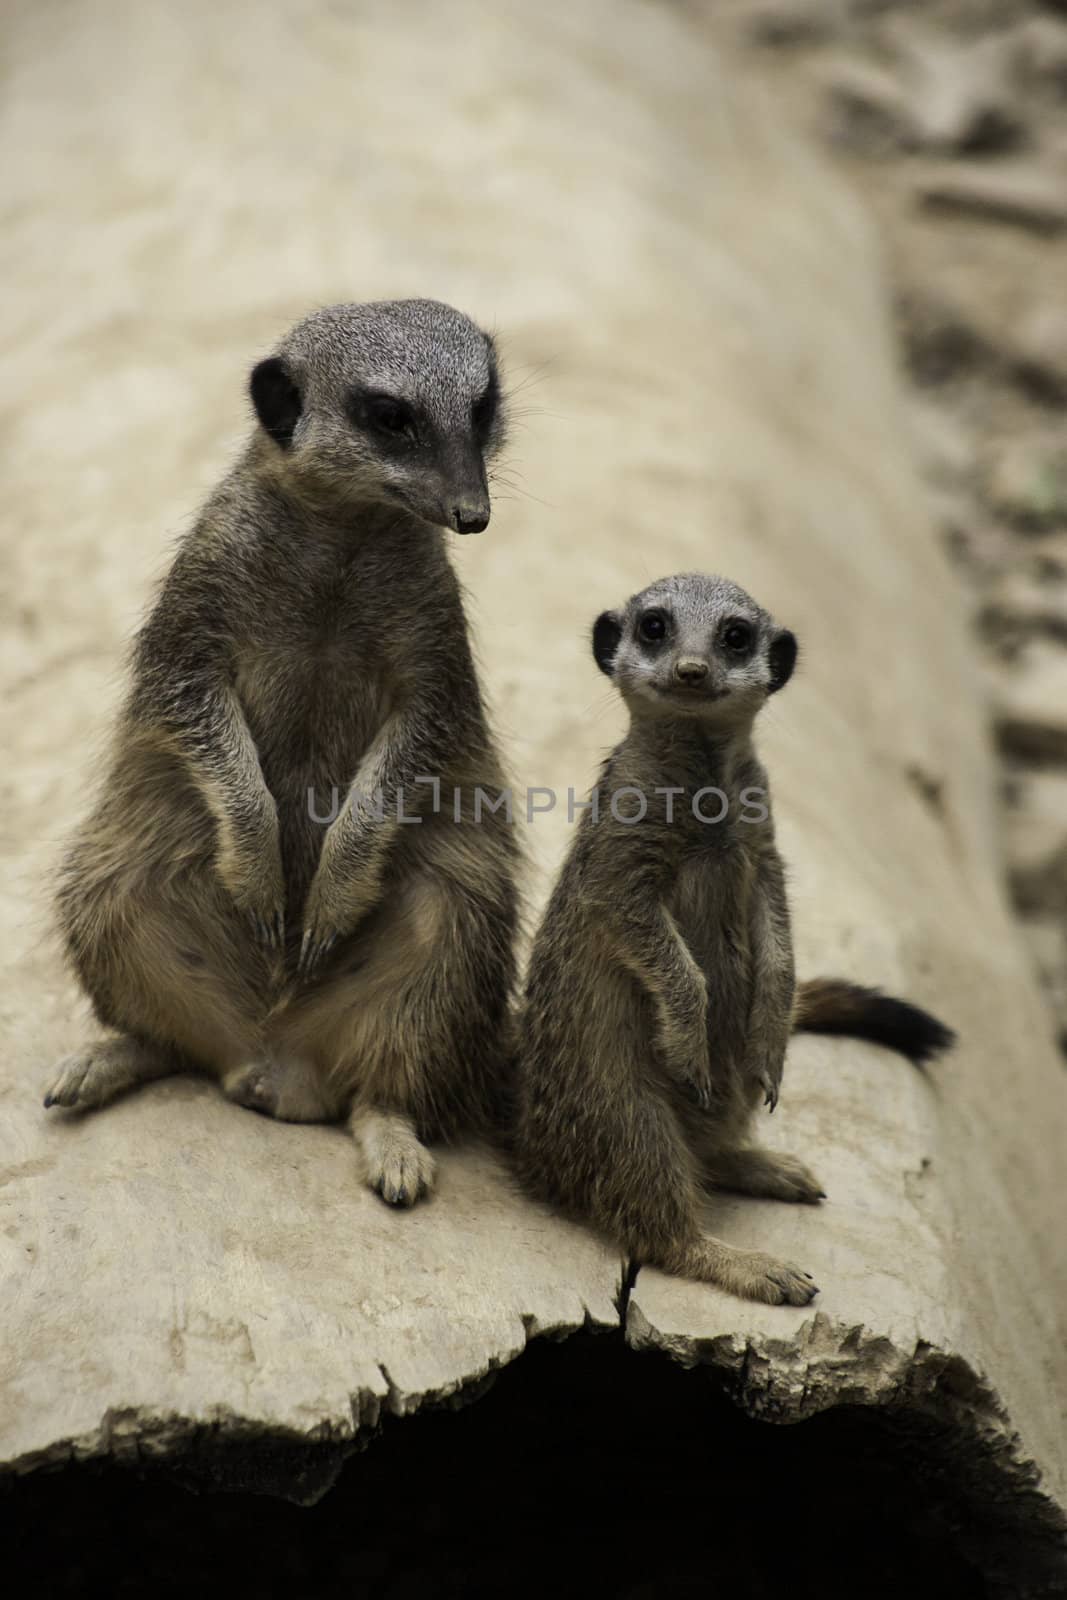 Two meerkats, Suricata suricatta by jrock635